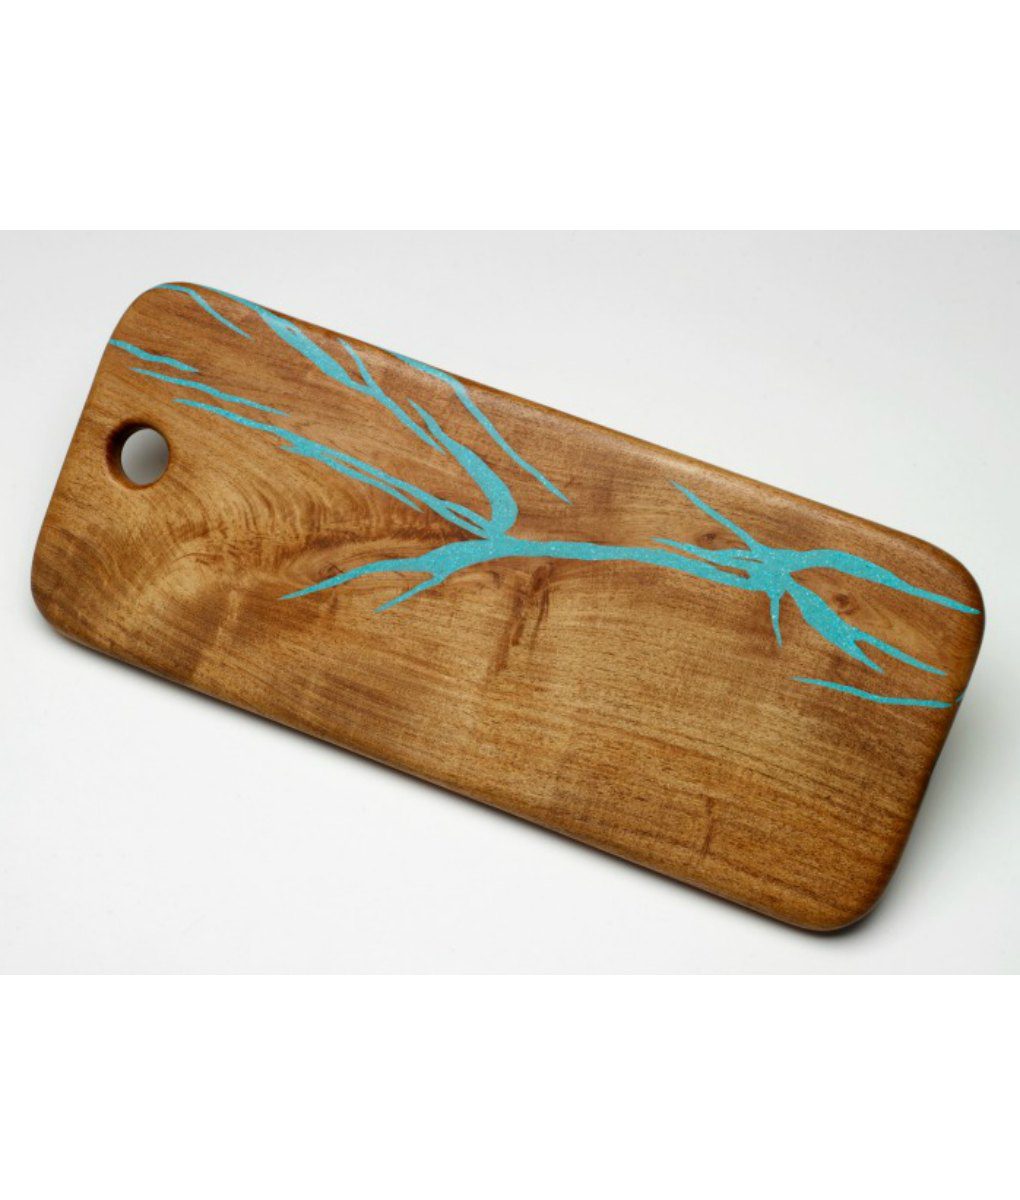 Maple Mahogany cutting board with Petoskey Stone Inlay #22-036